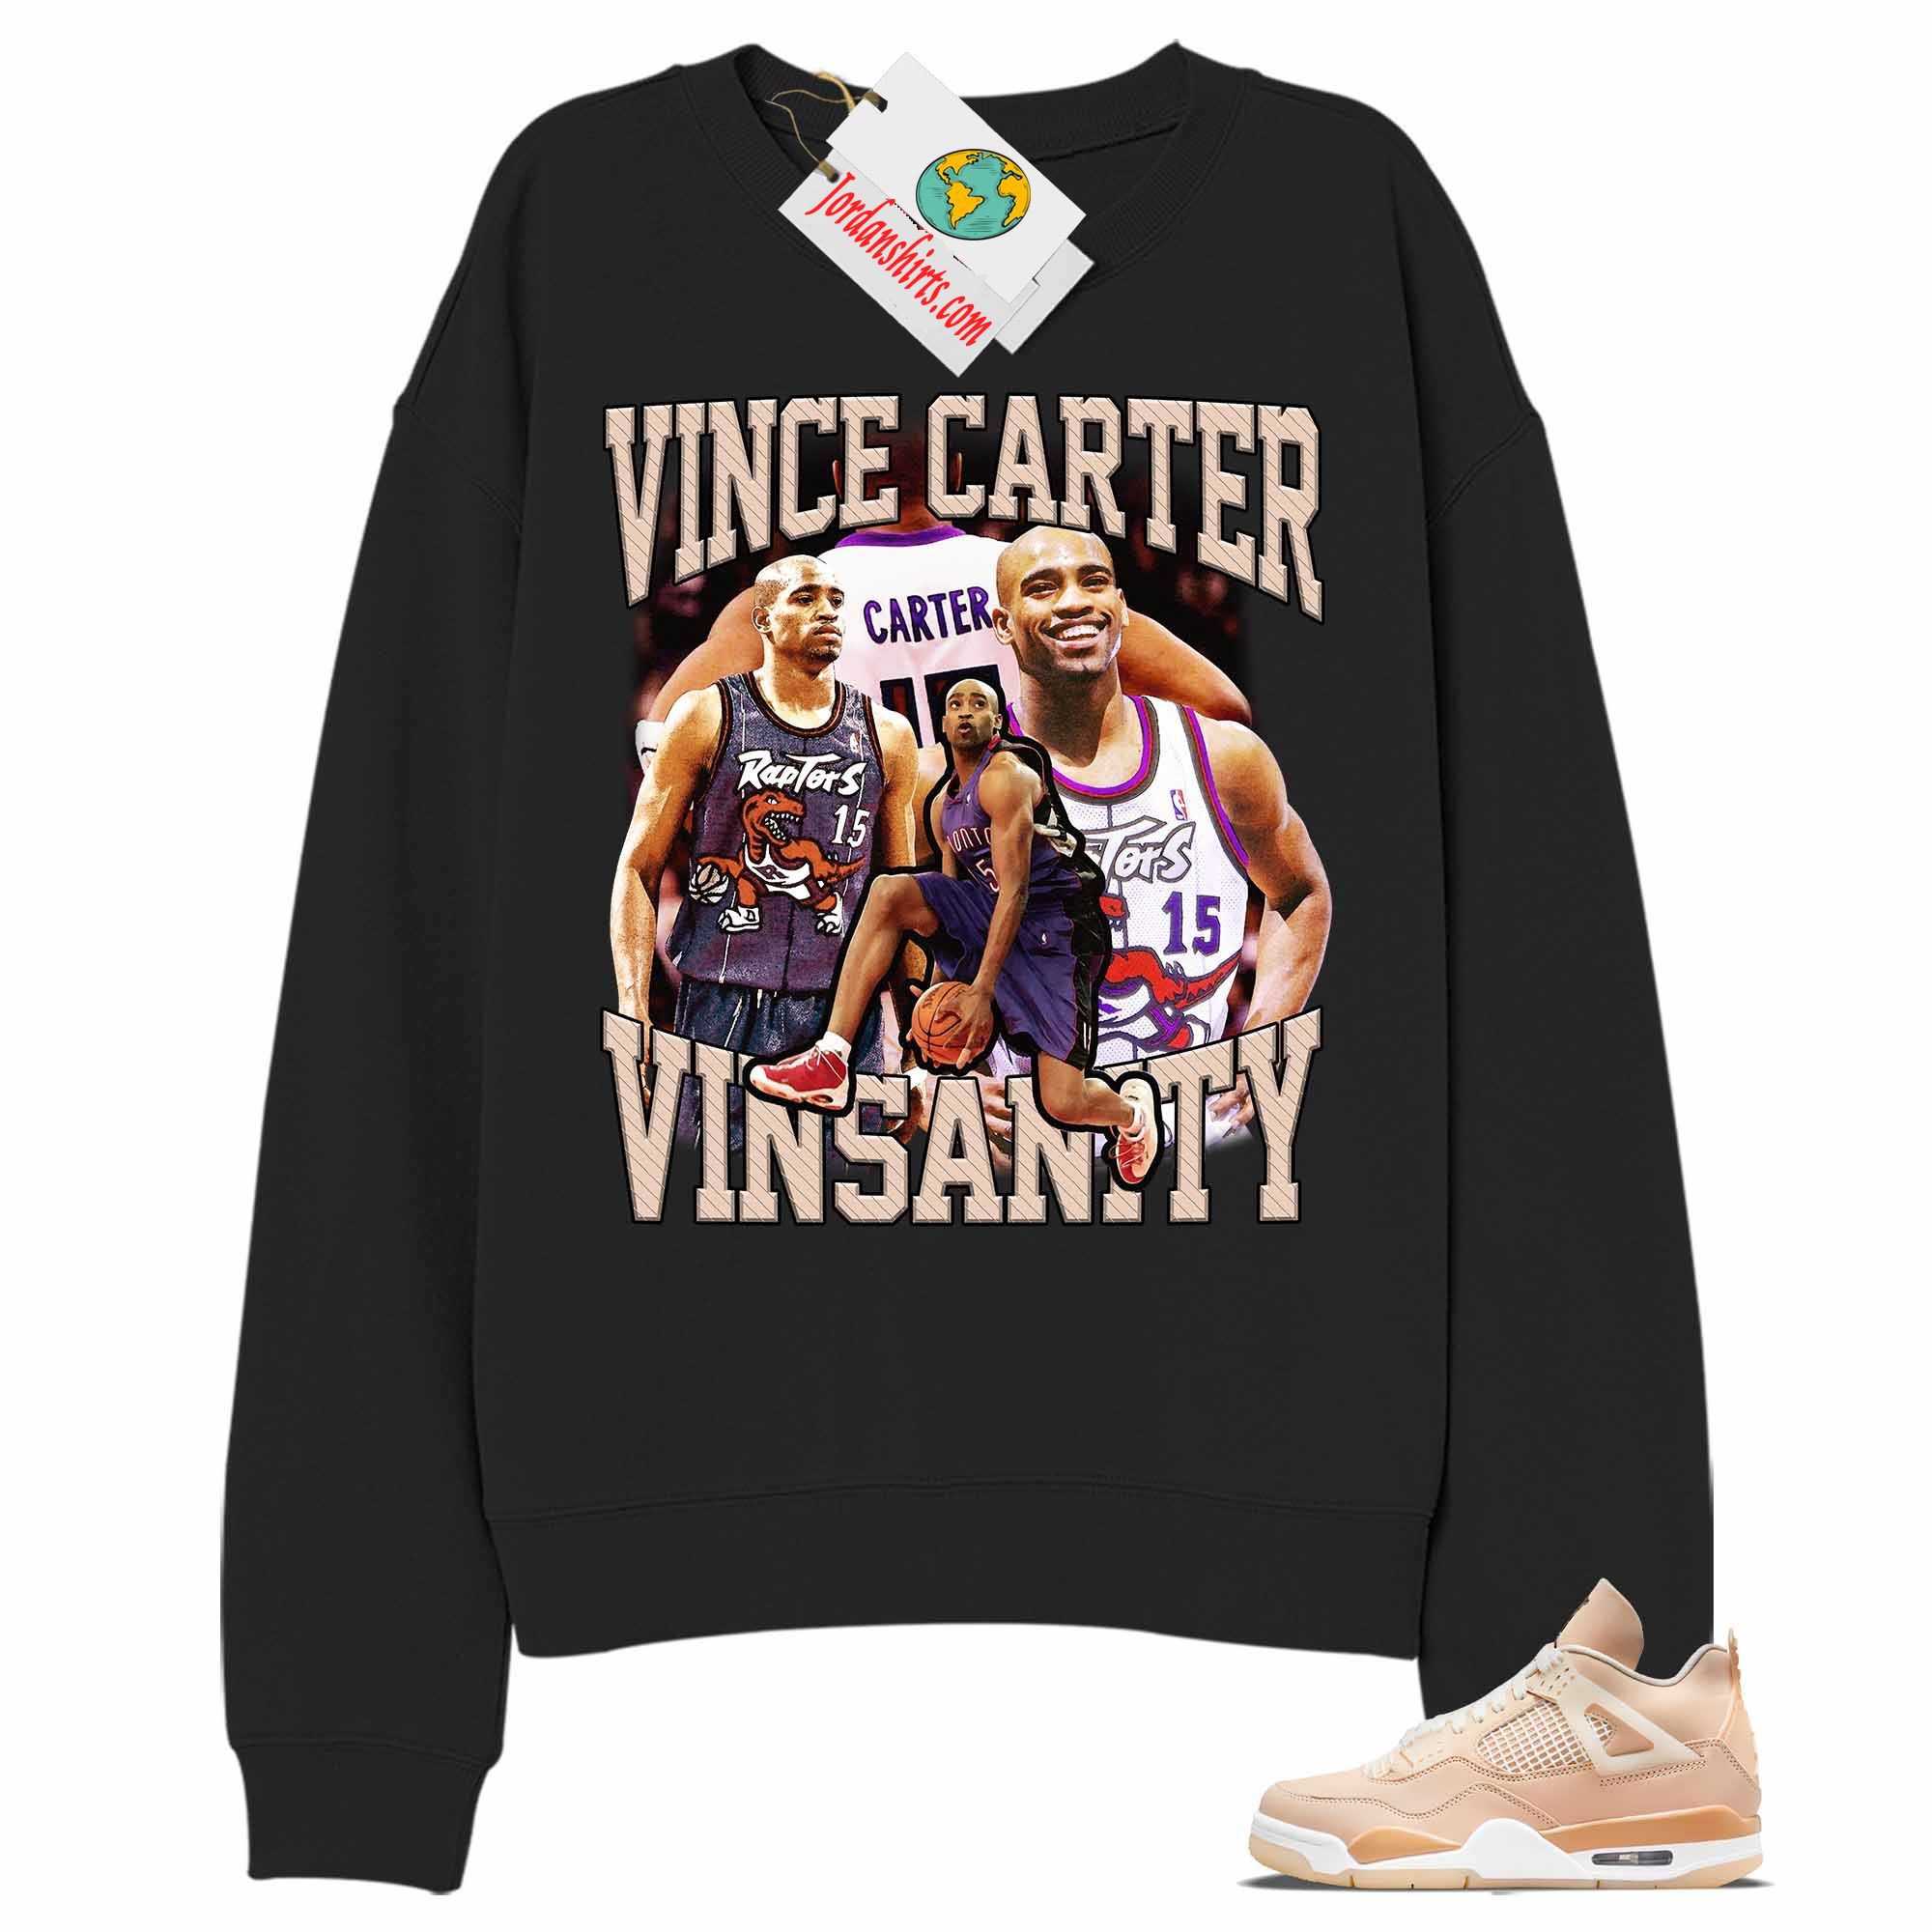 Jordan 4 Sweatshirt, Vince Carter Vinsanity Basketball 90s Retro Vintage Black Sweatshirt Air Jordan 4 Shimmer 4s Plus Size Up To 5xl